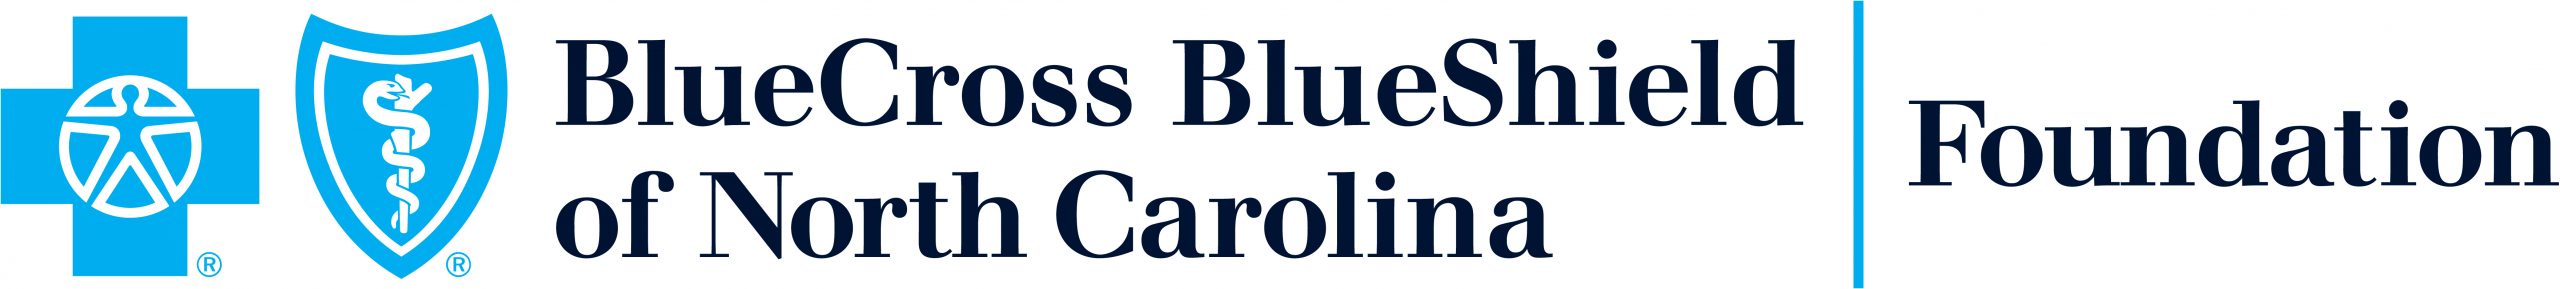 Blue Cross Blue Shield of North Carolina Foundation logo